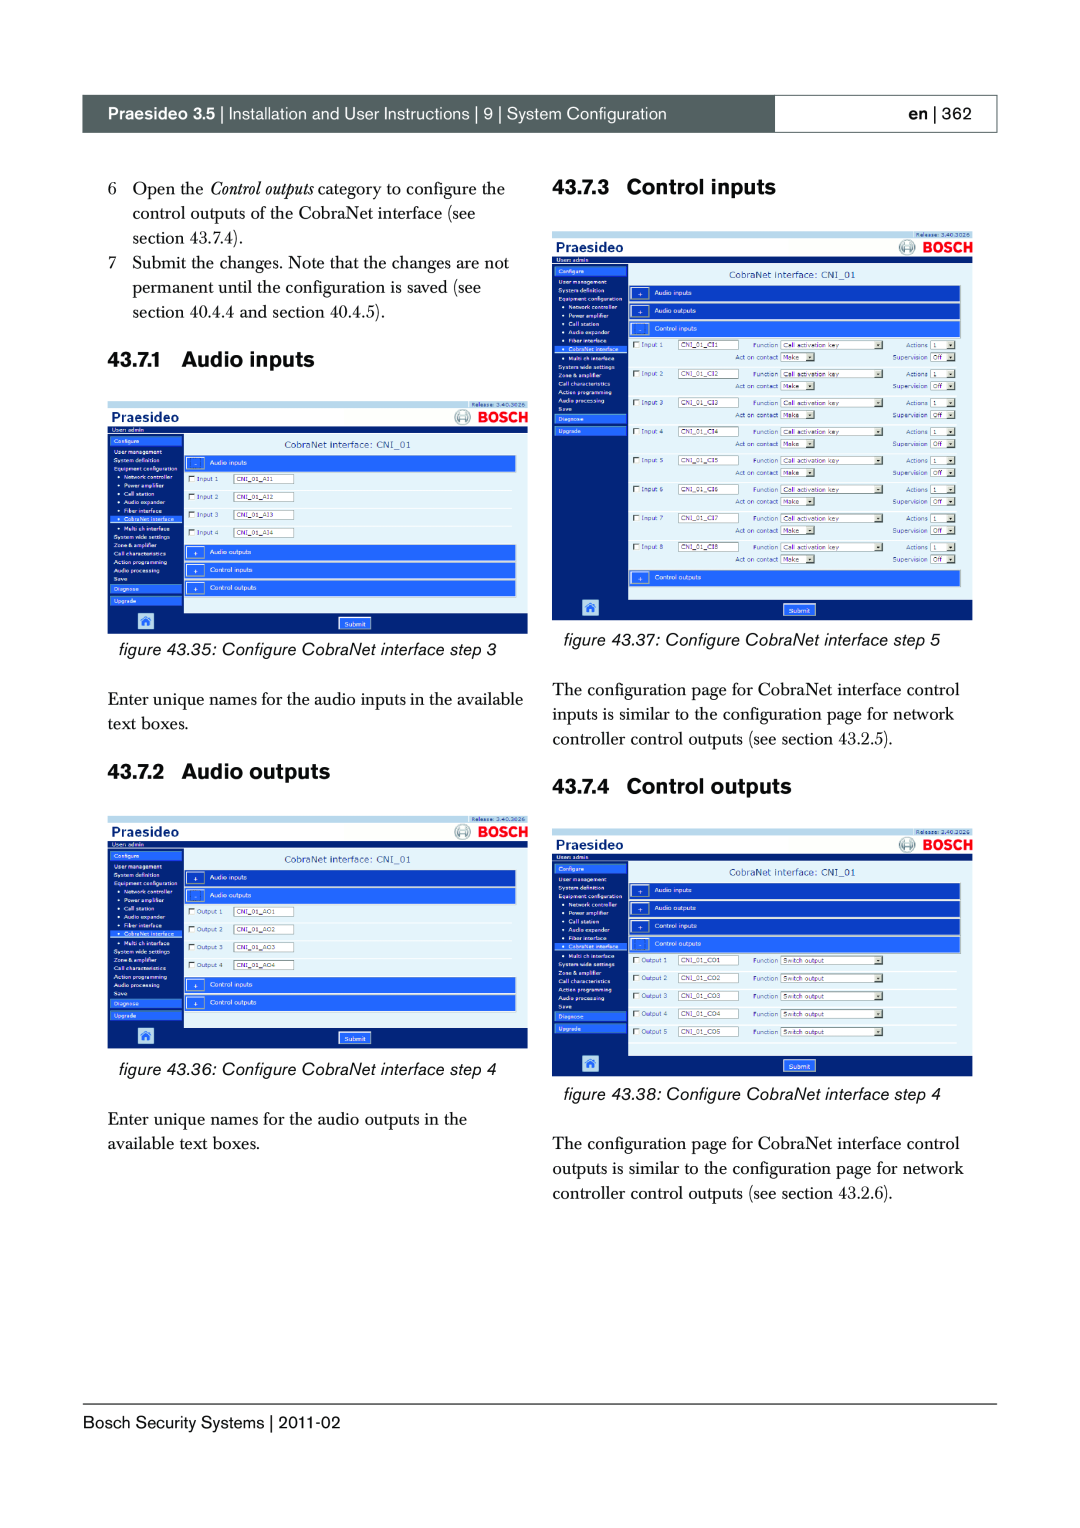 Bosch Appliances 3.5 Audio inputs, Audio outputs, Control inputs, Control outputs, 35: Configure CobraNet interface step 